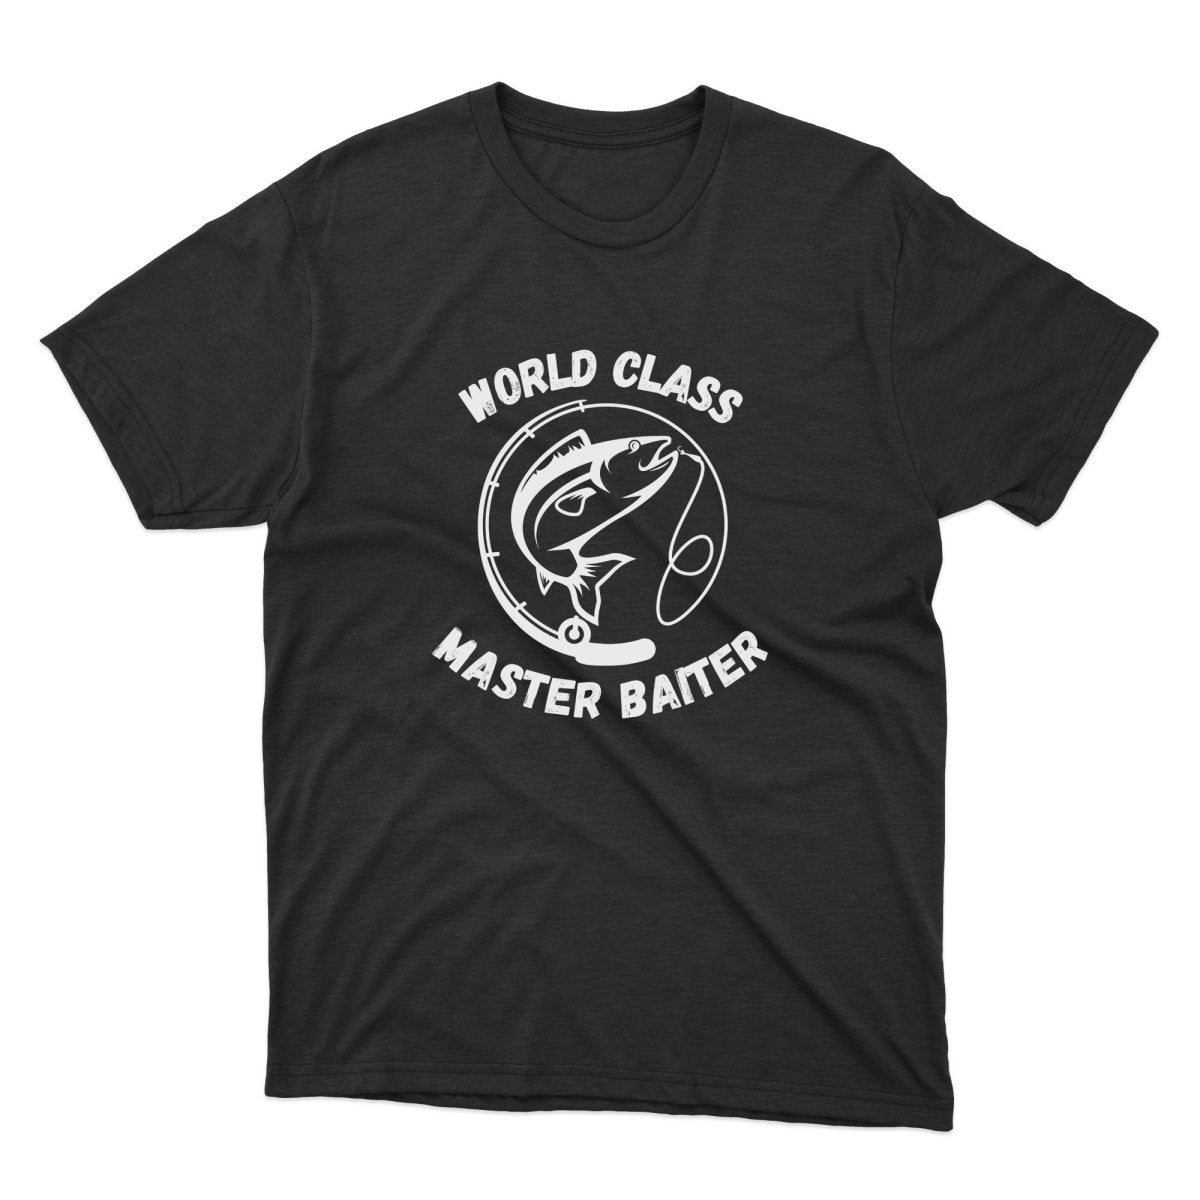 Master Baiter Fish Shirt - stickerbullMaster Baiter Fish ShirtShirtsPrintifystickerbull15780073564166675475BlackSa black t - shirt that says world class master batter